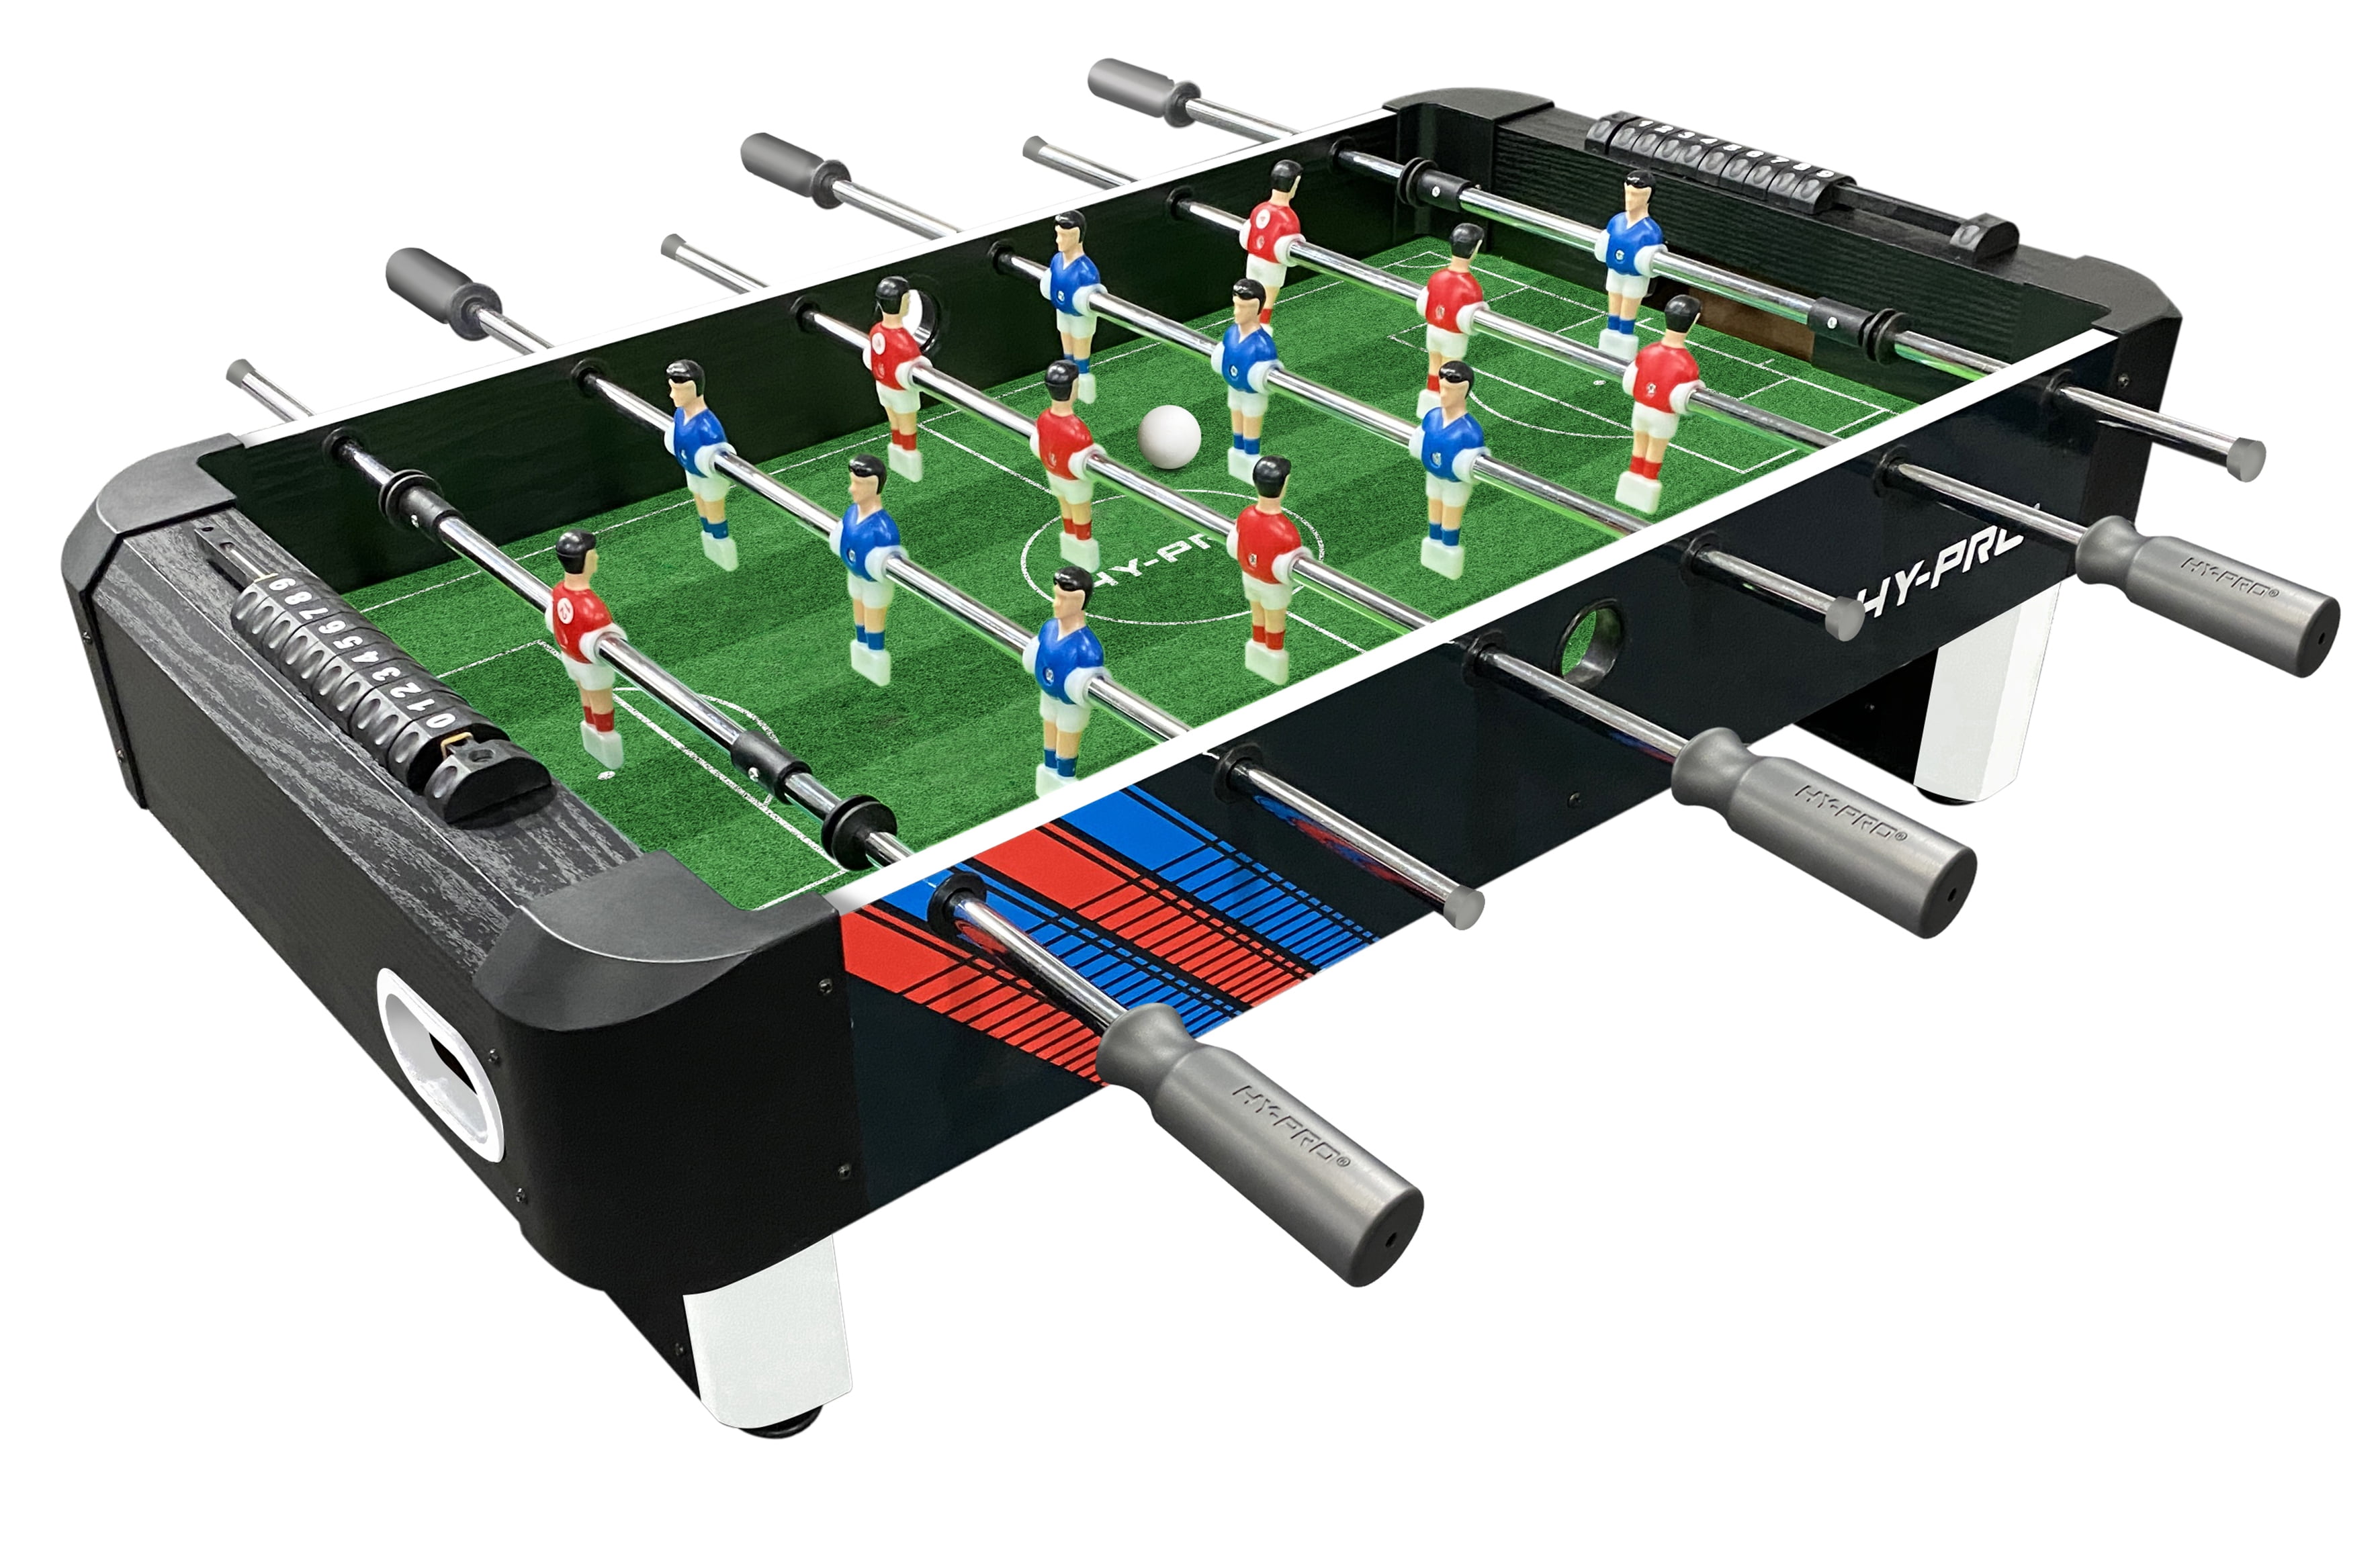 Foosball Soccer Table Desktop Football Counter Scoring Scorer Keeper Gadget C 